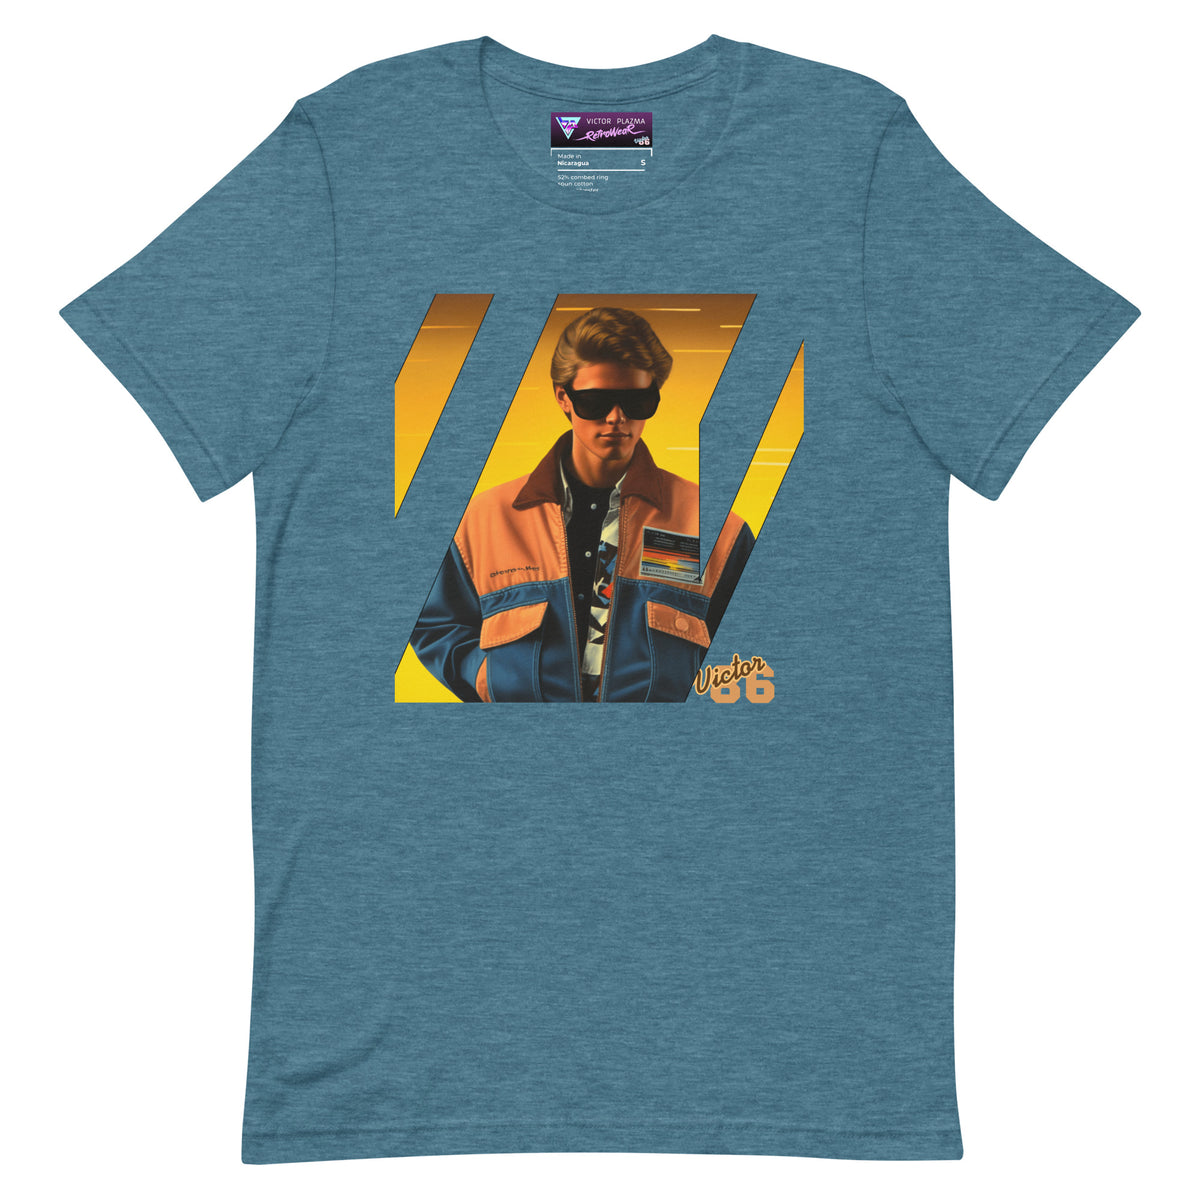 Unisex Plazma Coolest T-Shirt - Kid The Victor